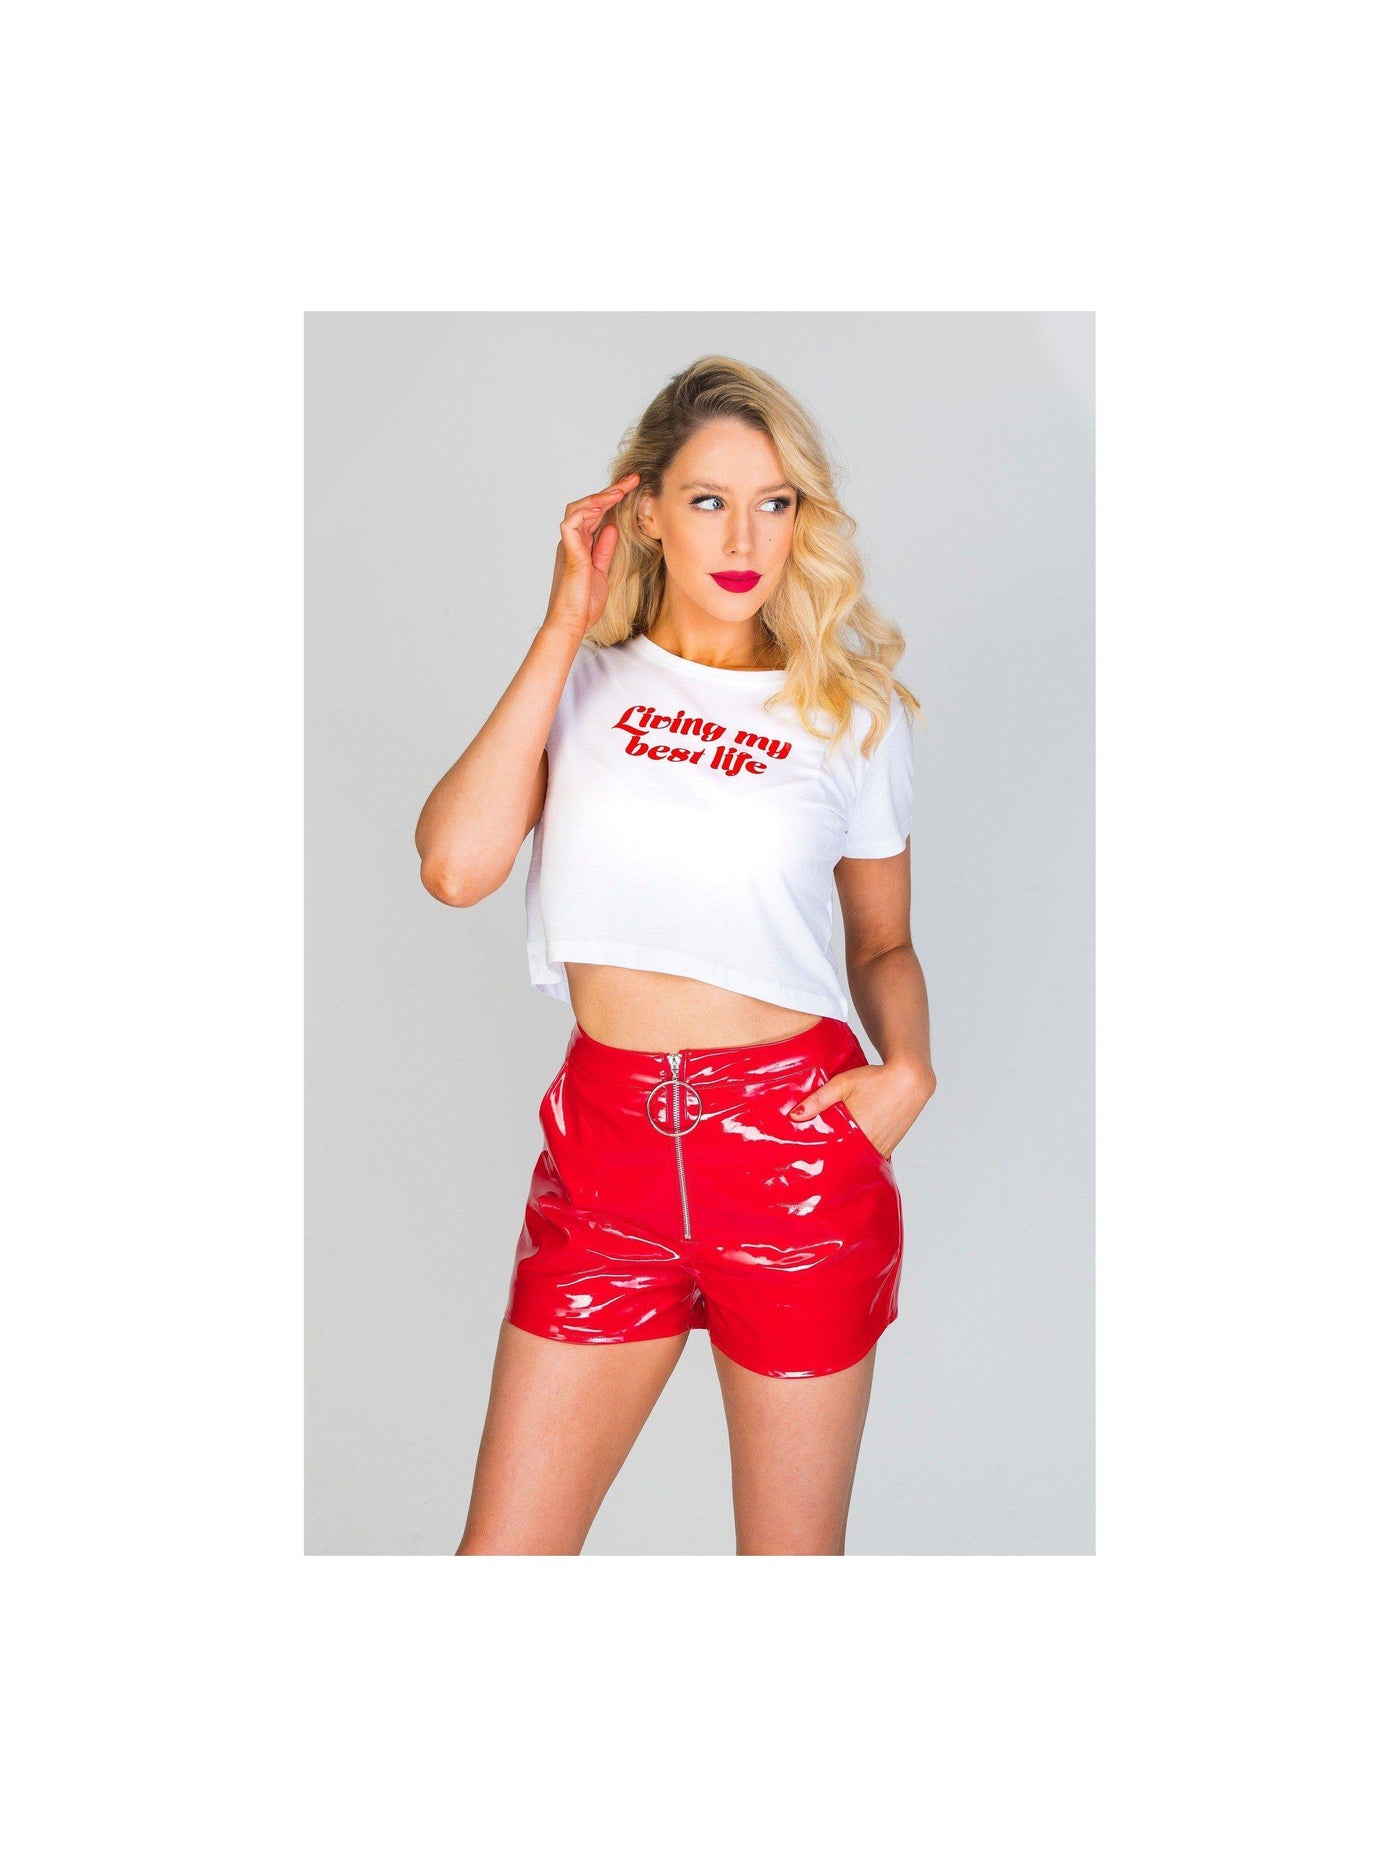 The 'Maria' Red Vinyl Shorts